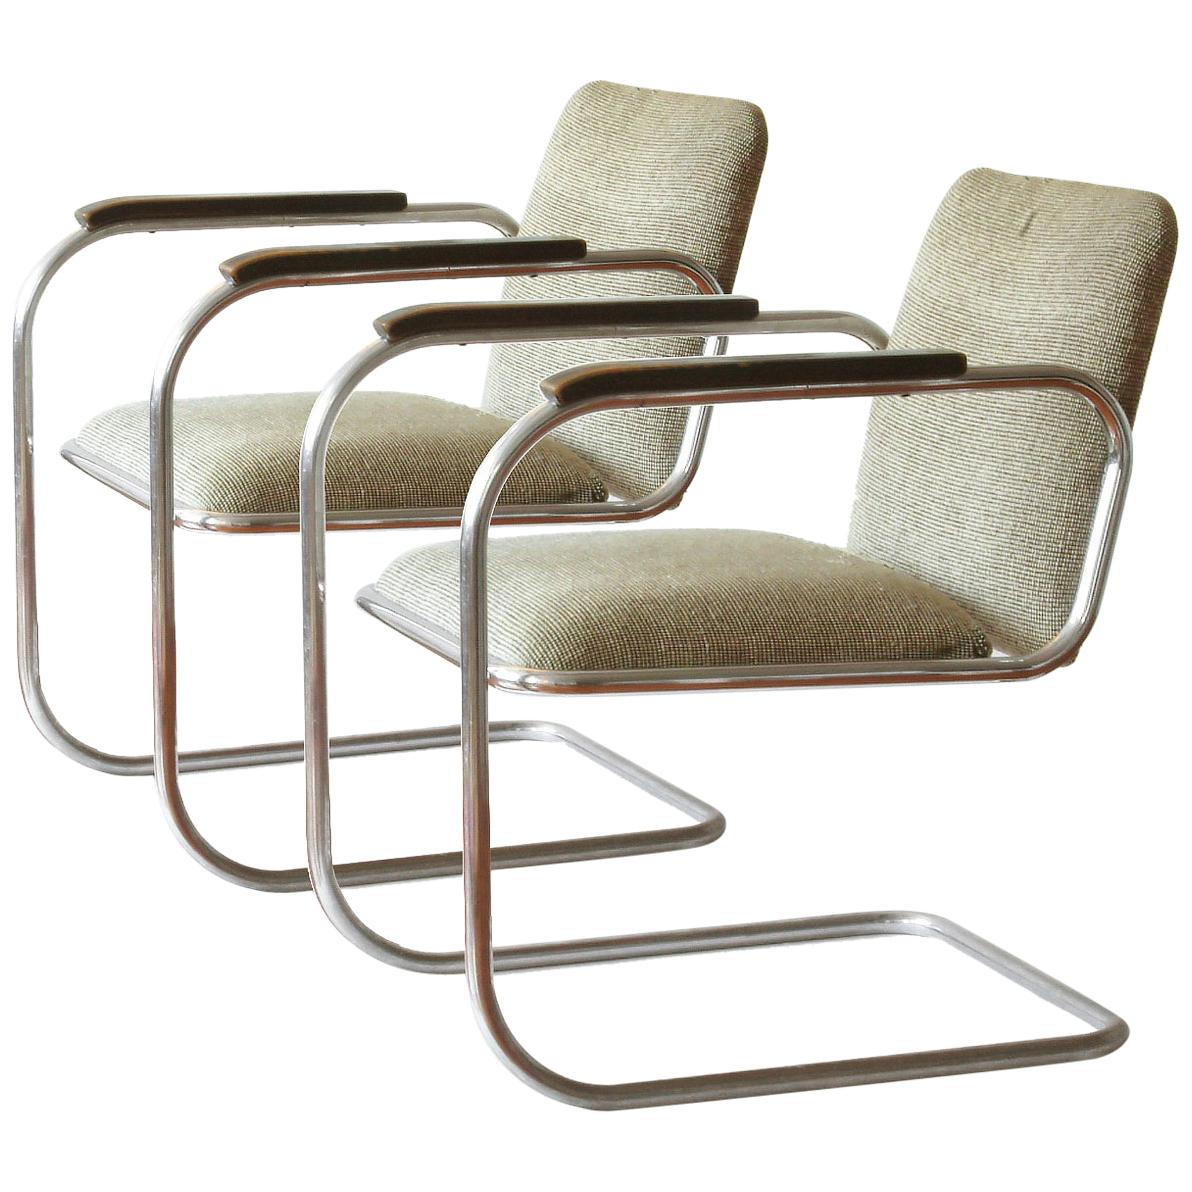 Bauhaus, Tubular Steel Cantilever Chairs Pair, Mauser Werke, Germany, circa 1932